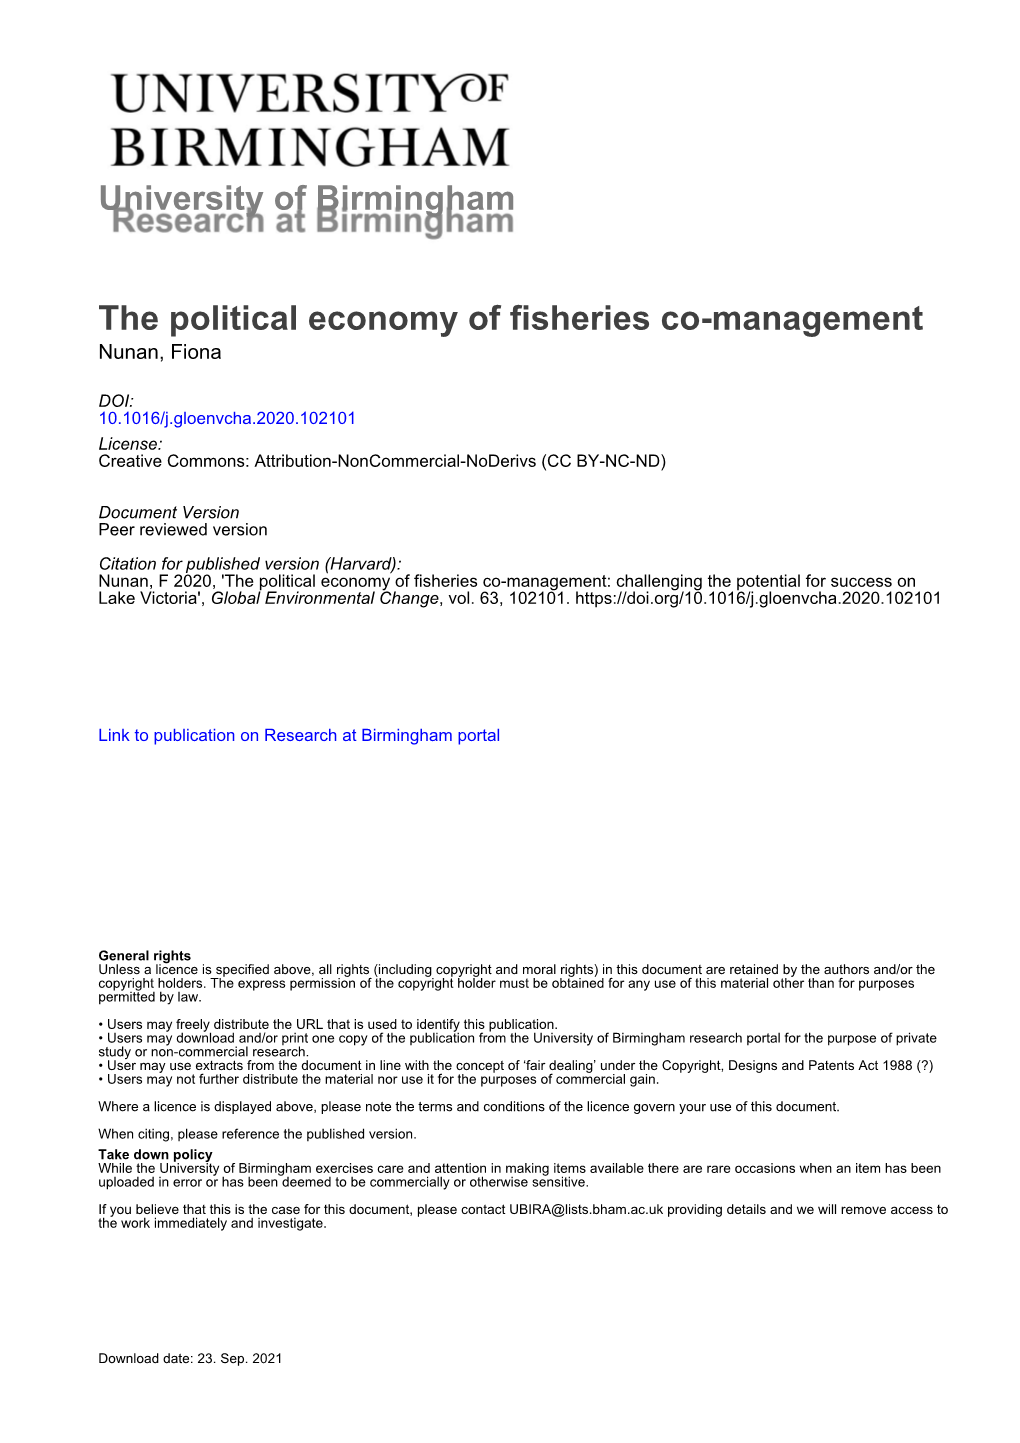 University of Birmingham the Political Economy of Fisheries Co-Management